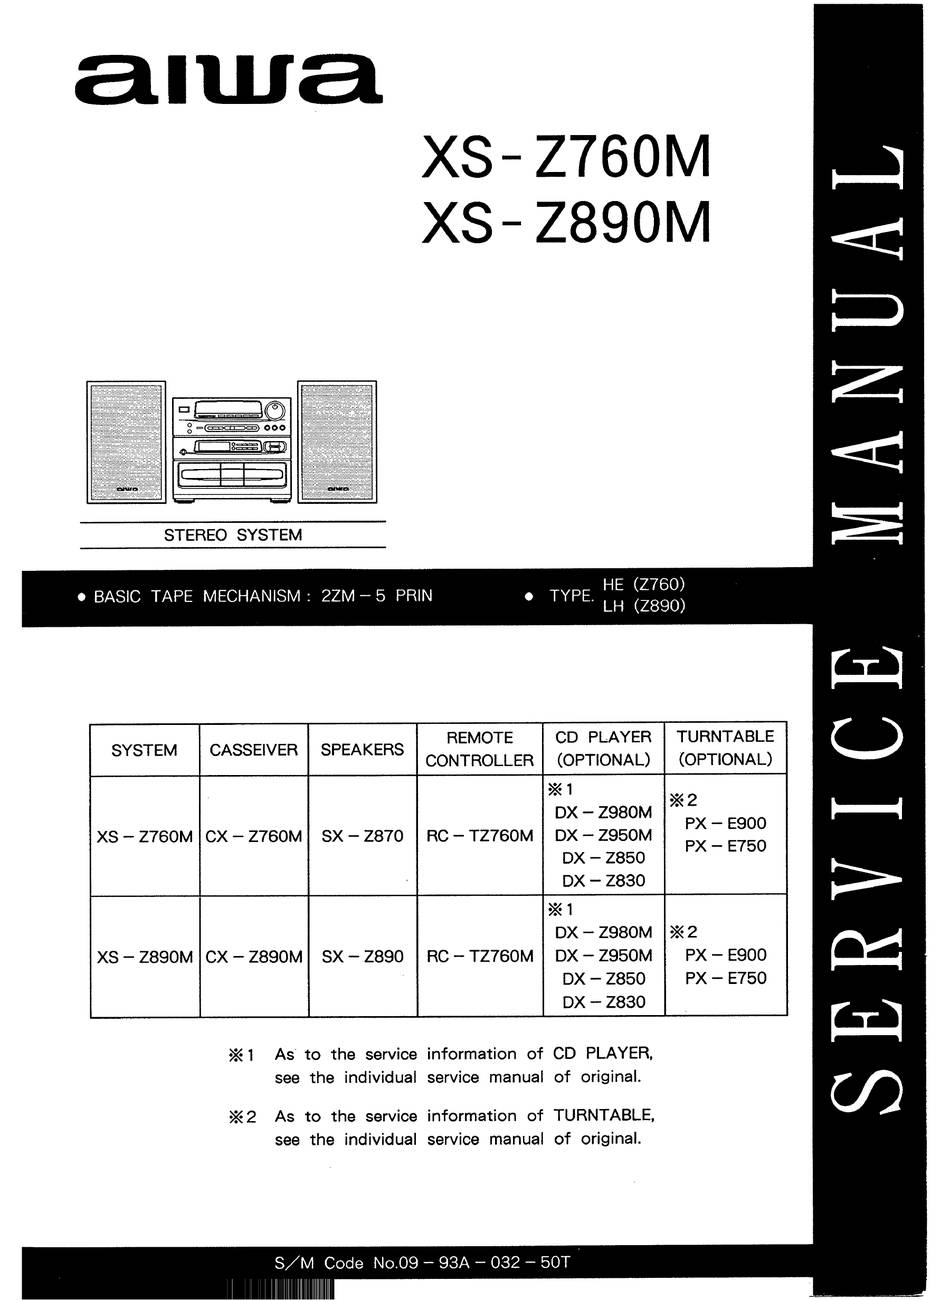 Aiwa XS-Z760M